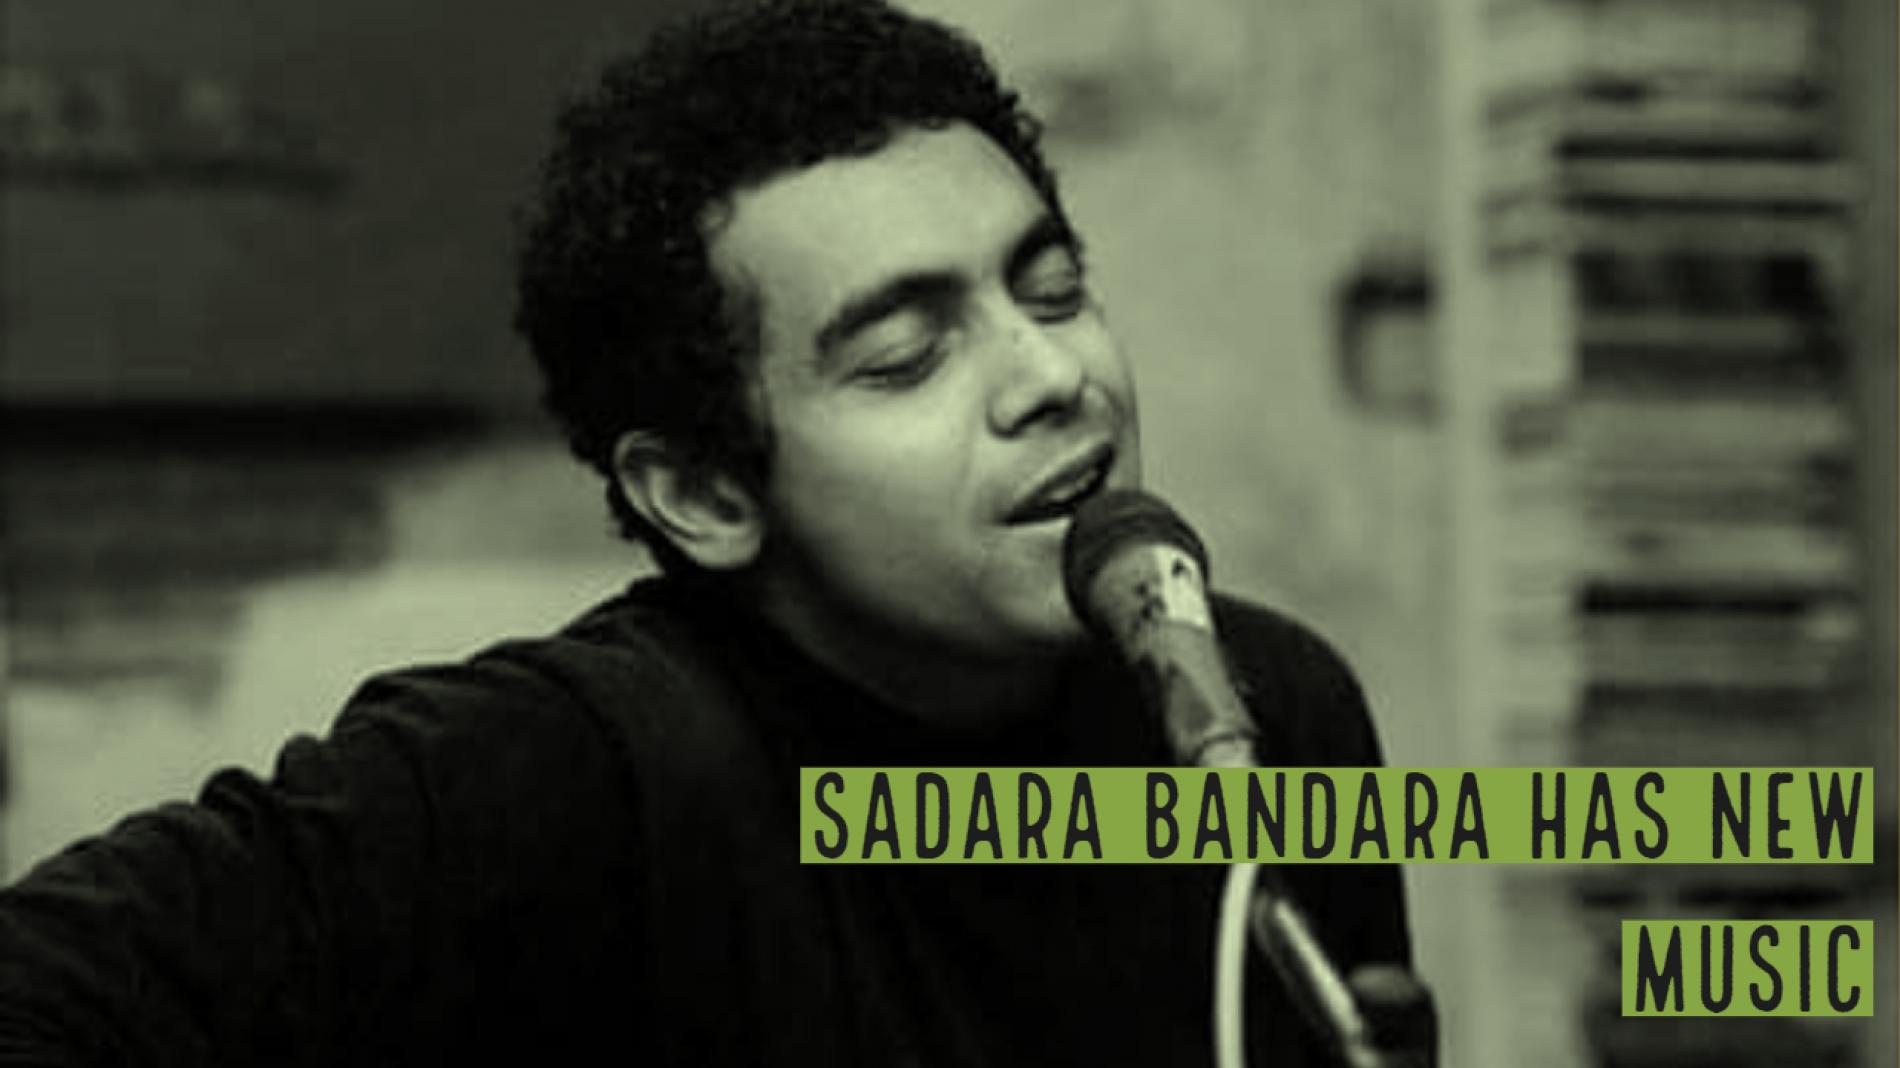 Sadara Bandara Announces New Music